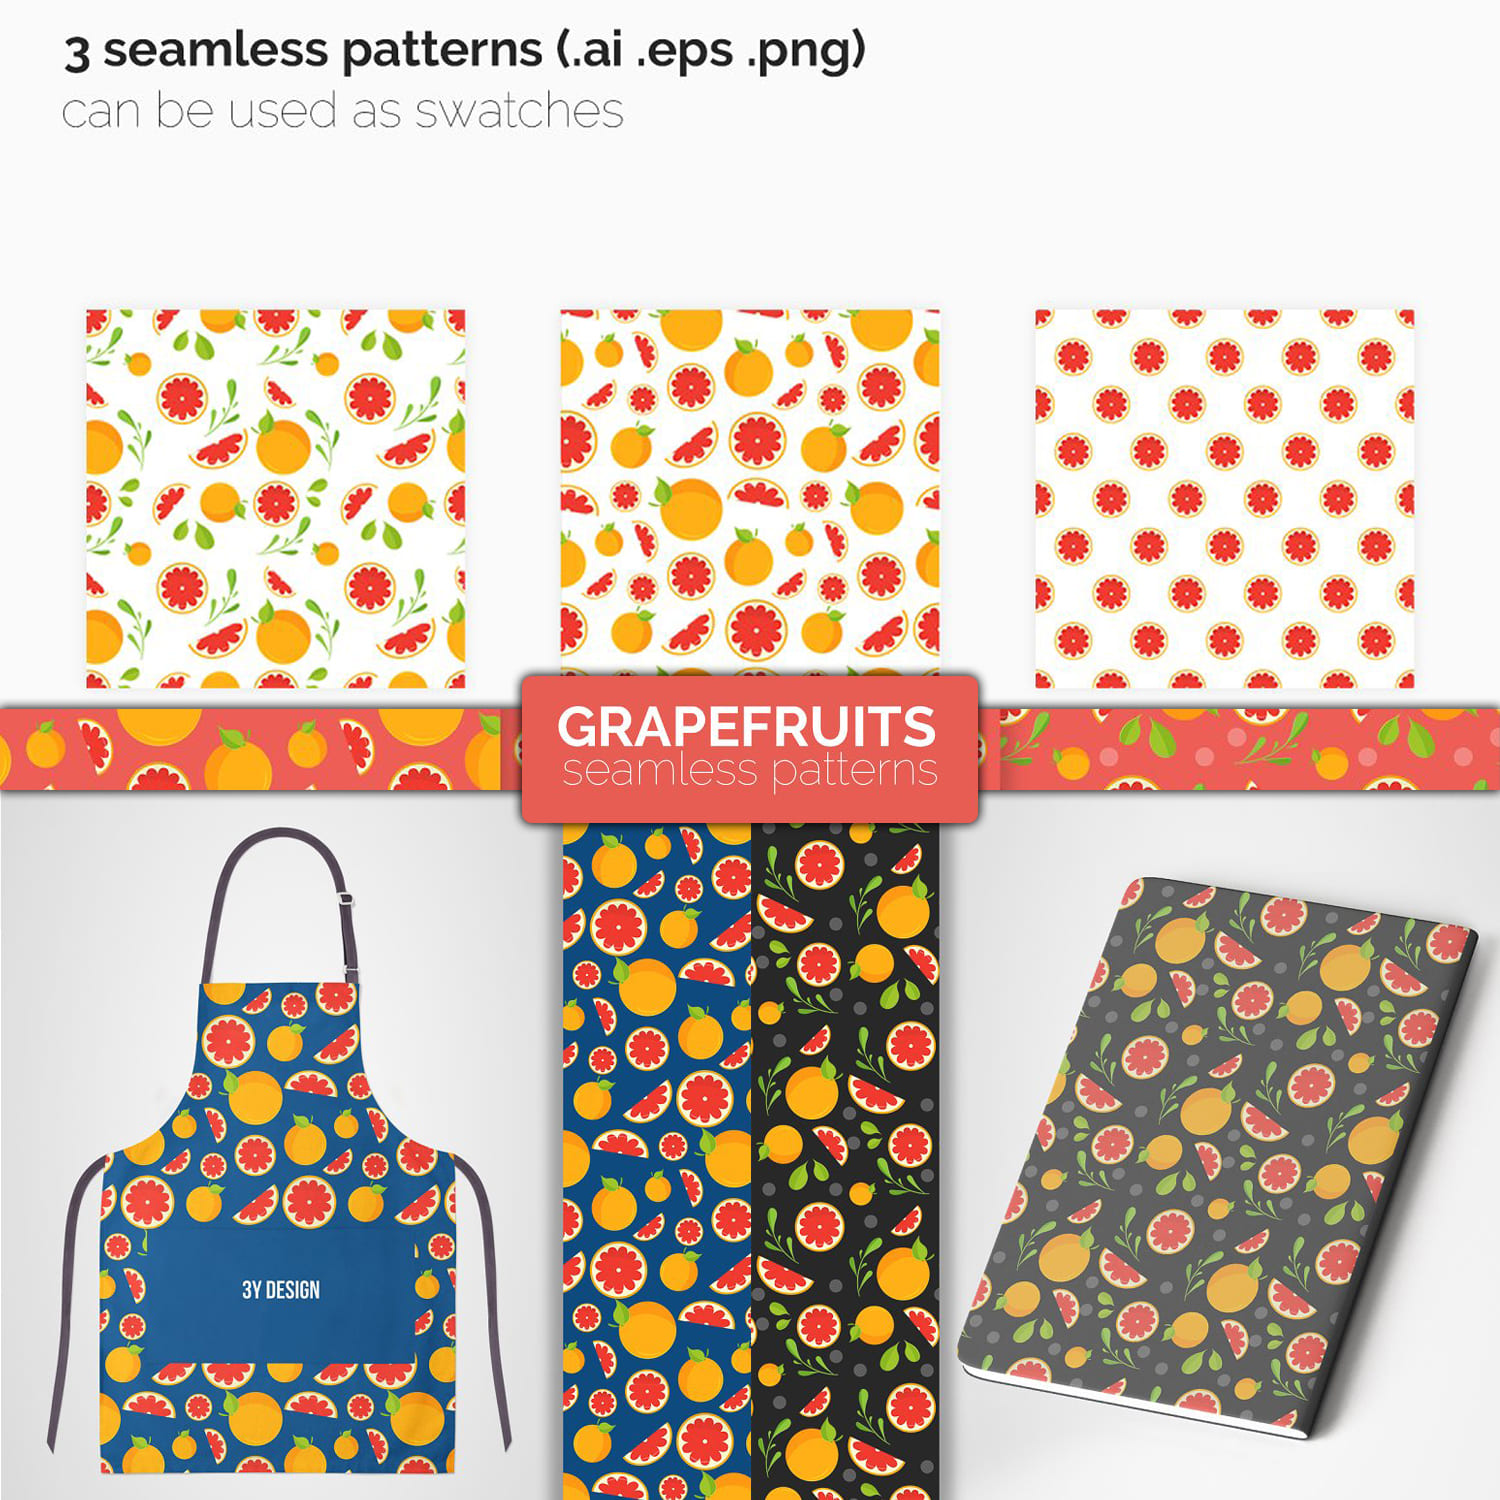 grapefruits seamless patterns illustrations.